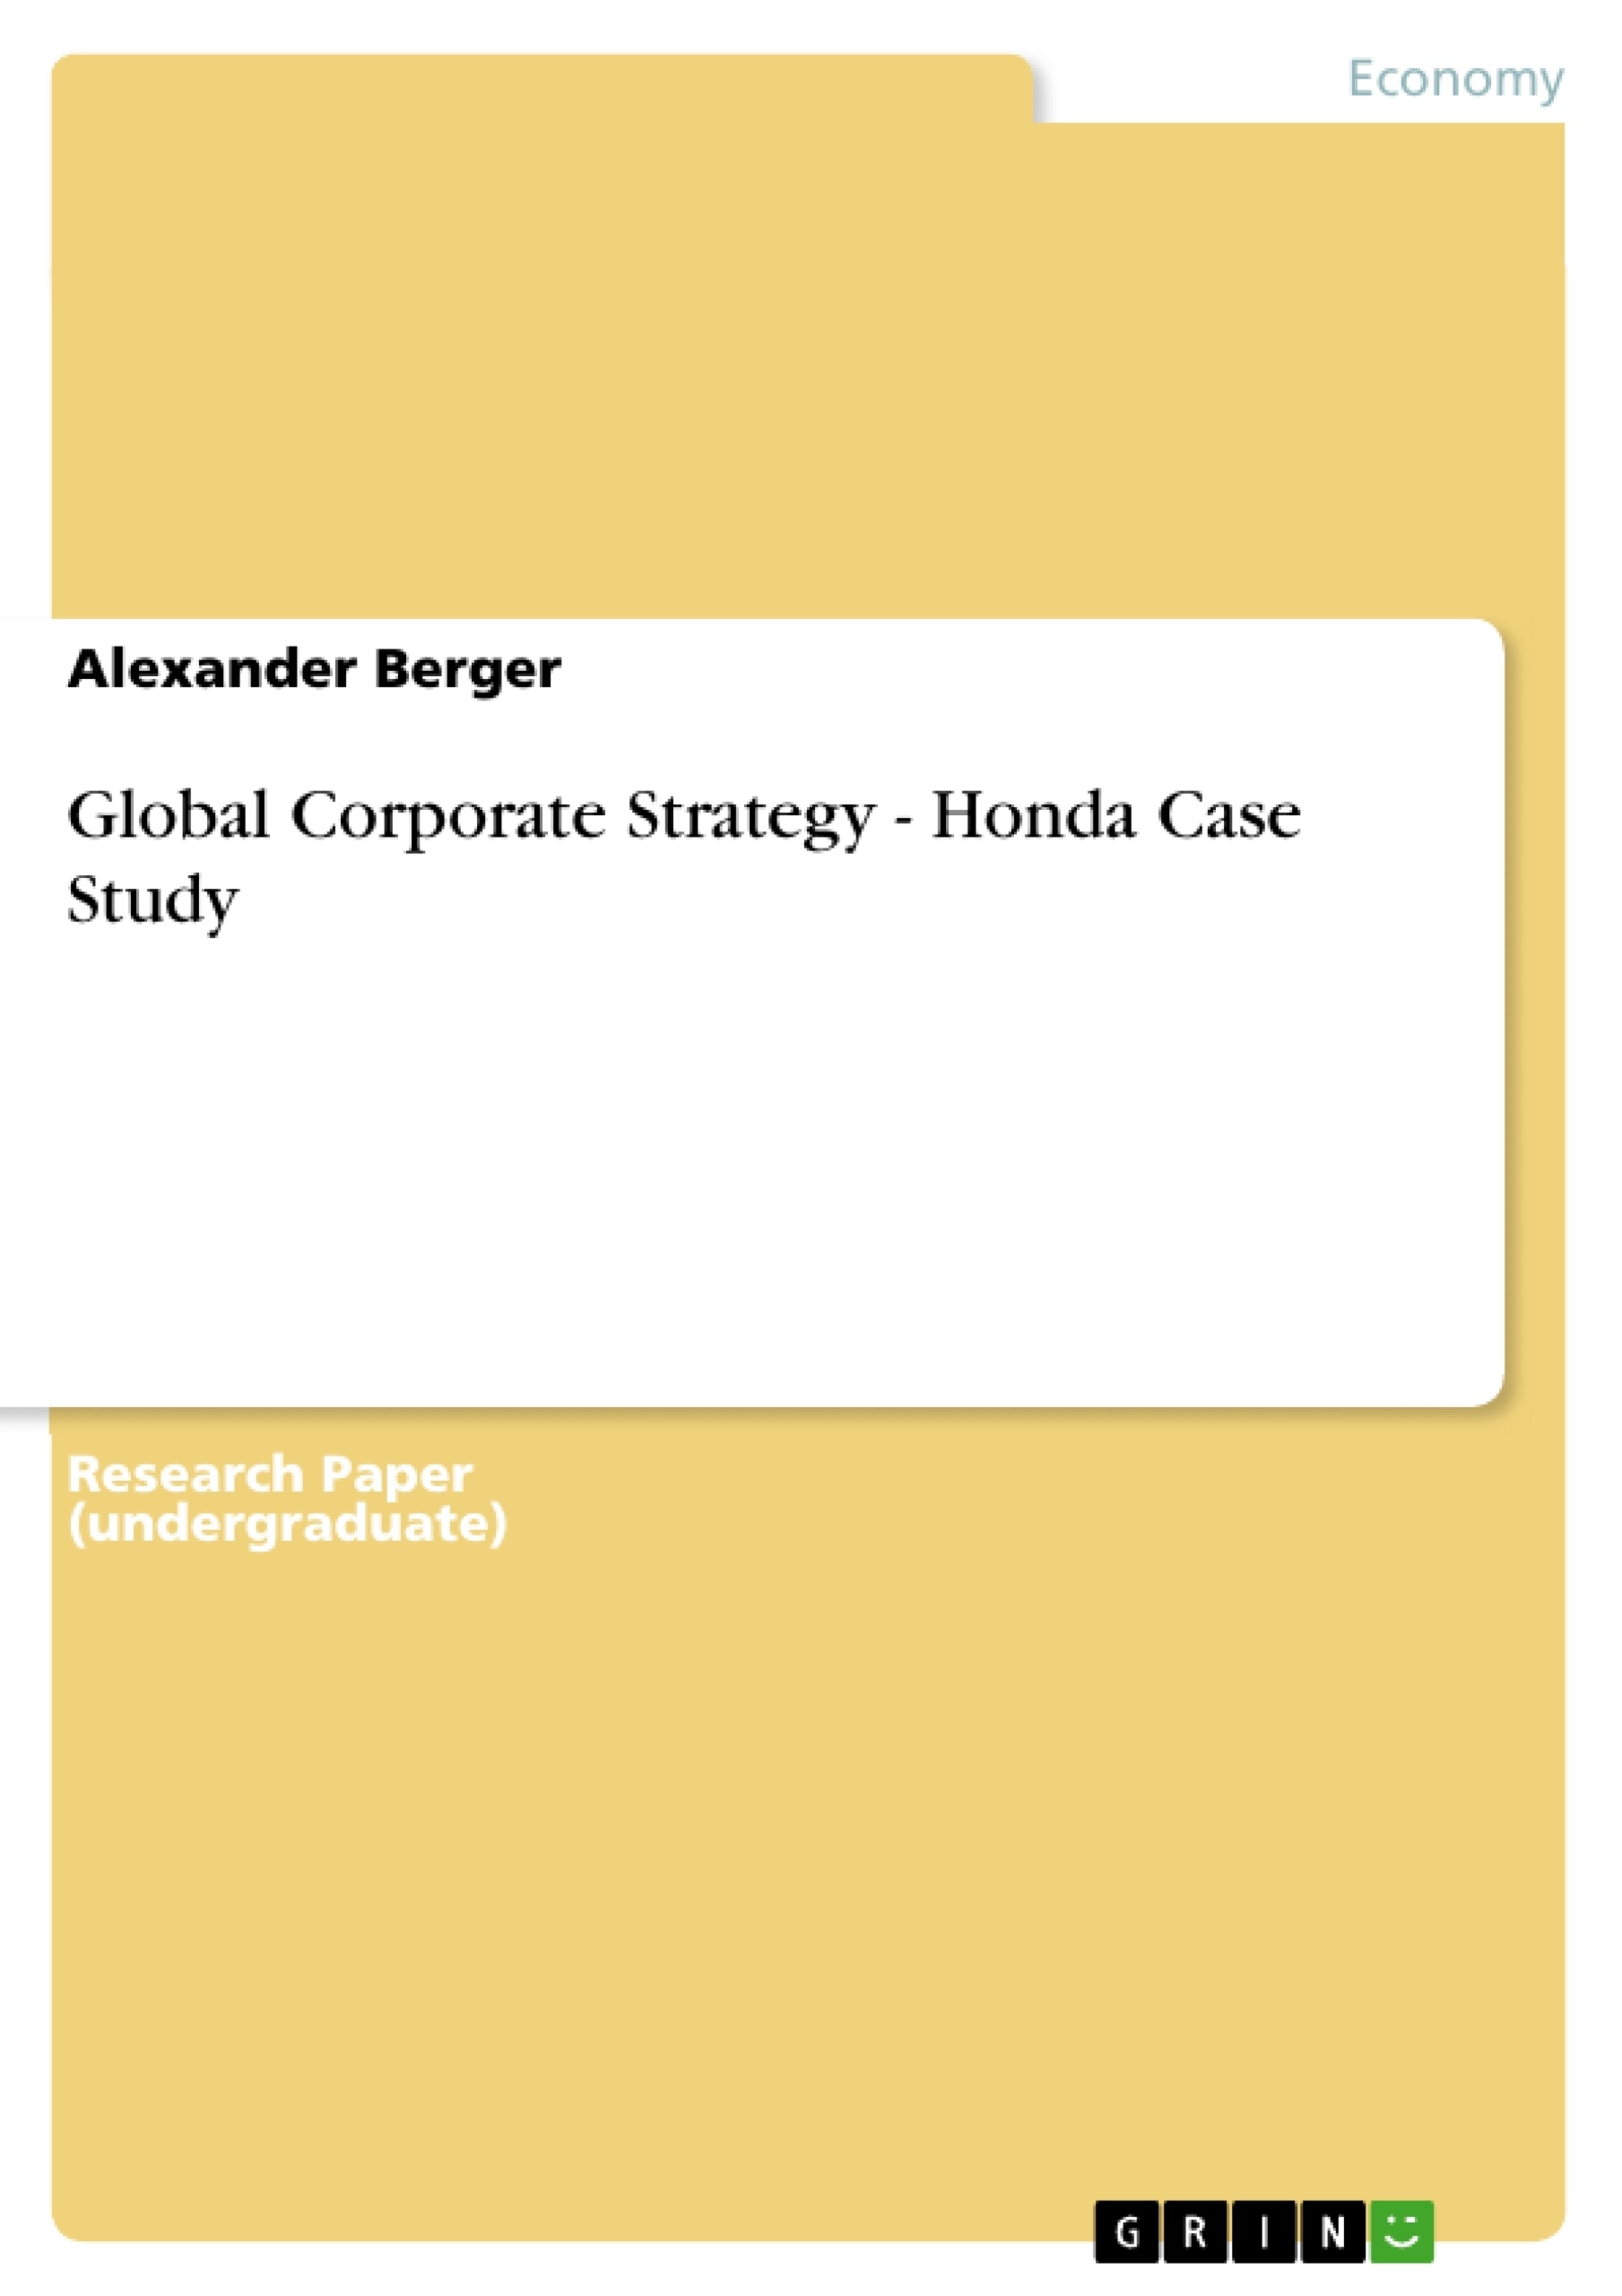 Title: Global Corporate Strategy - Honda Case Study